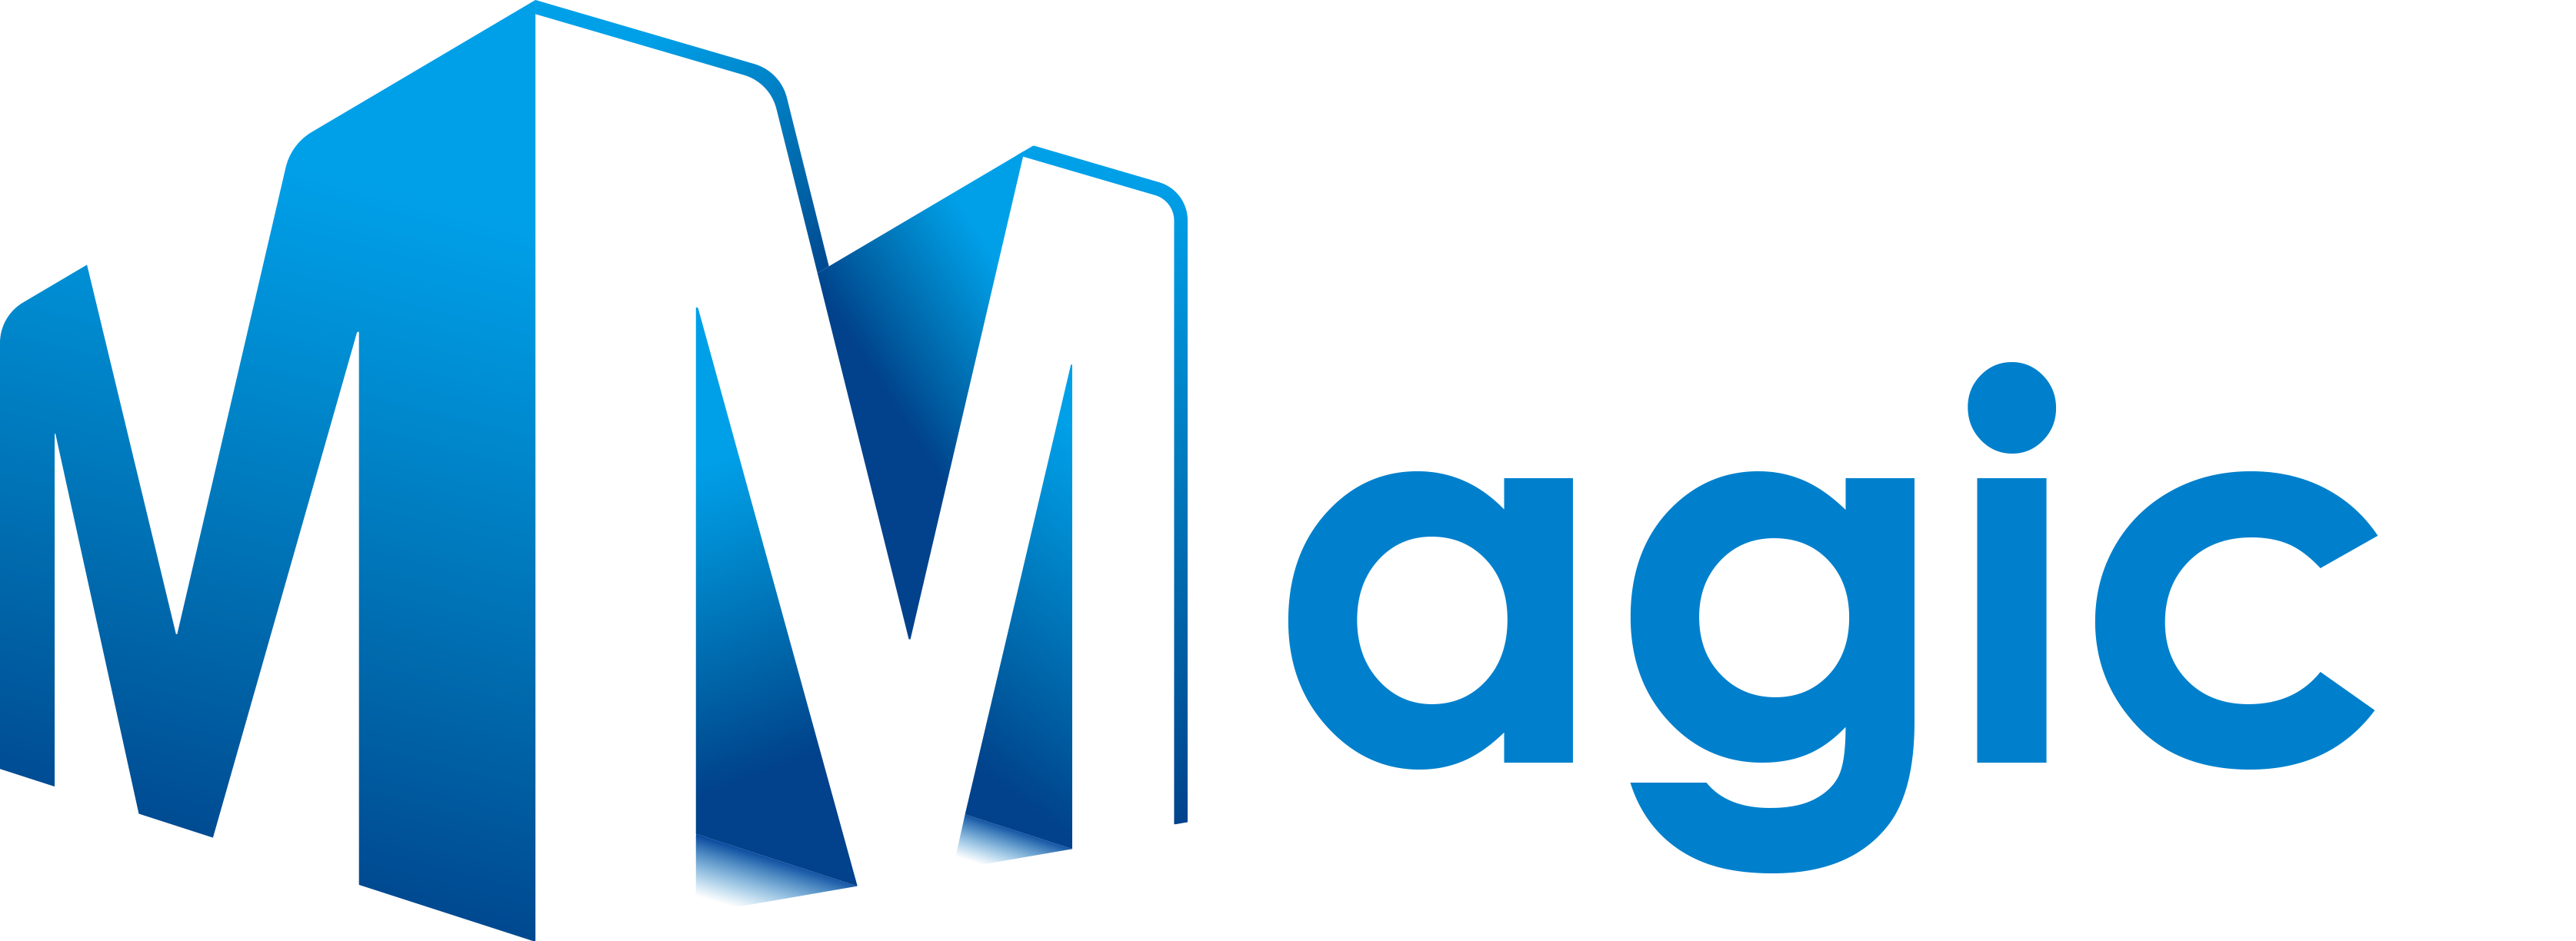 mmagic-logo.png